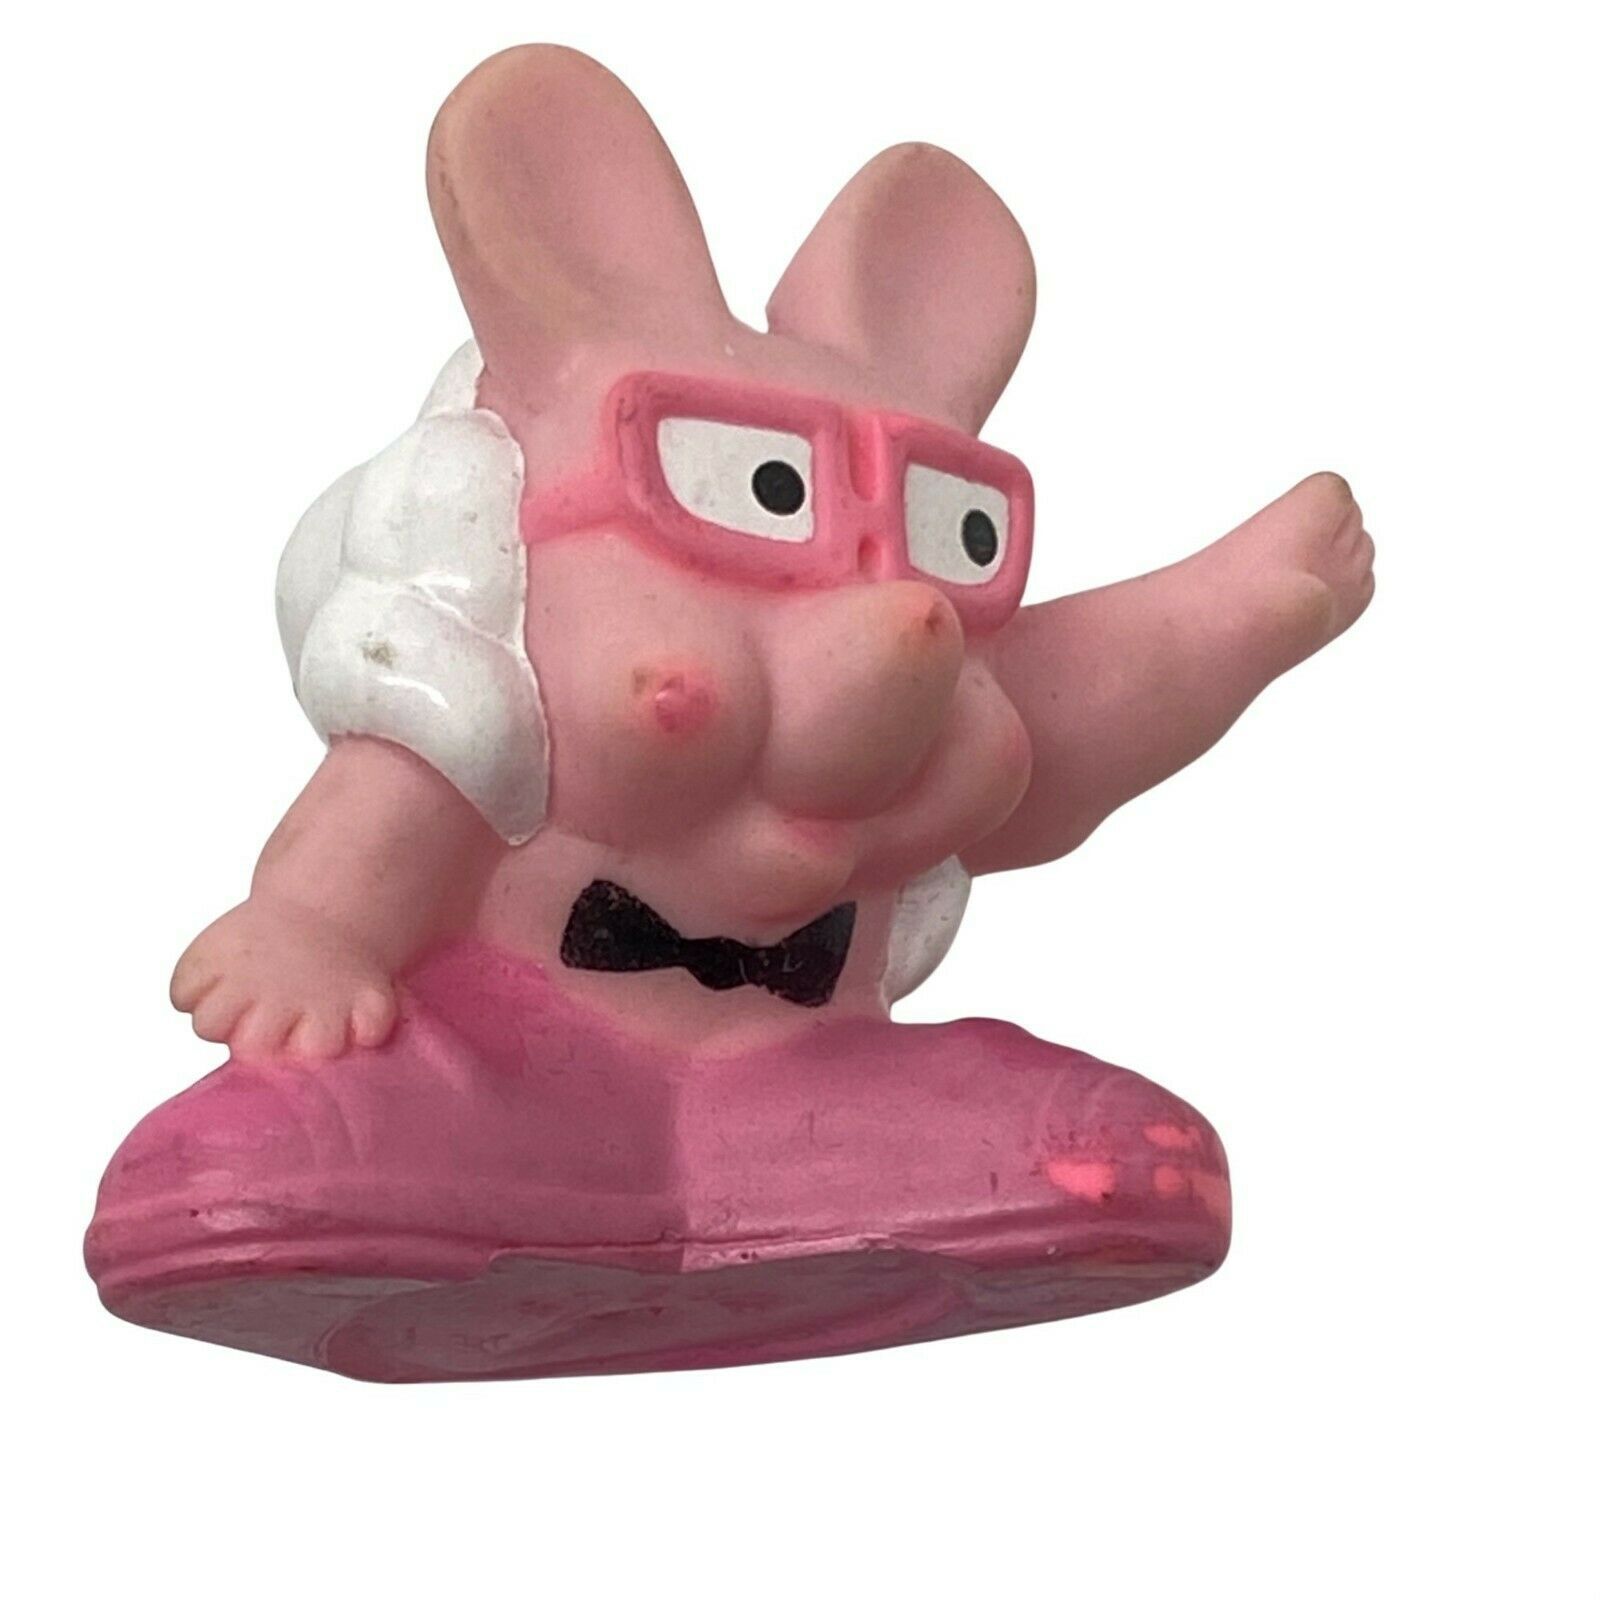 Keypers Finder Vintage Tonka Toys "Bowtie" for Joyful Wedding Bunny Rabbit - $14.40